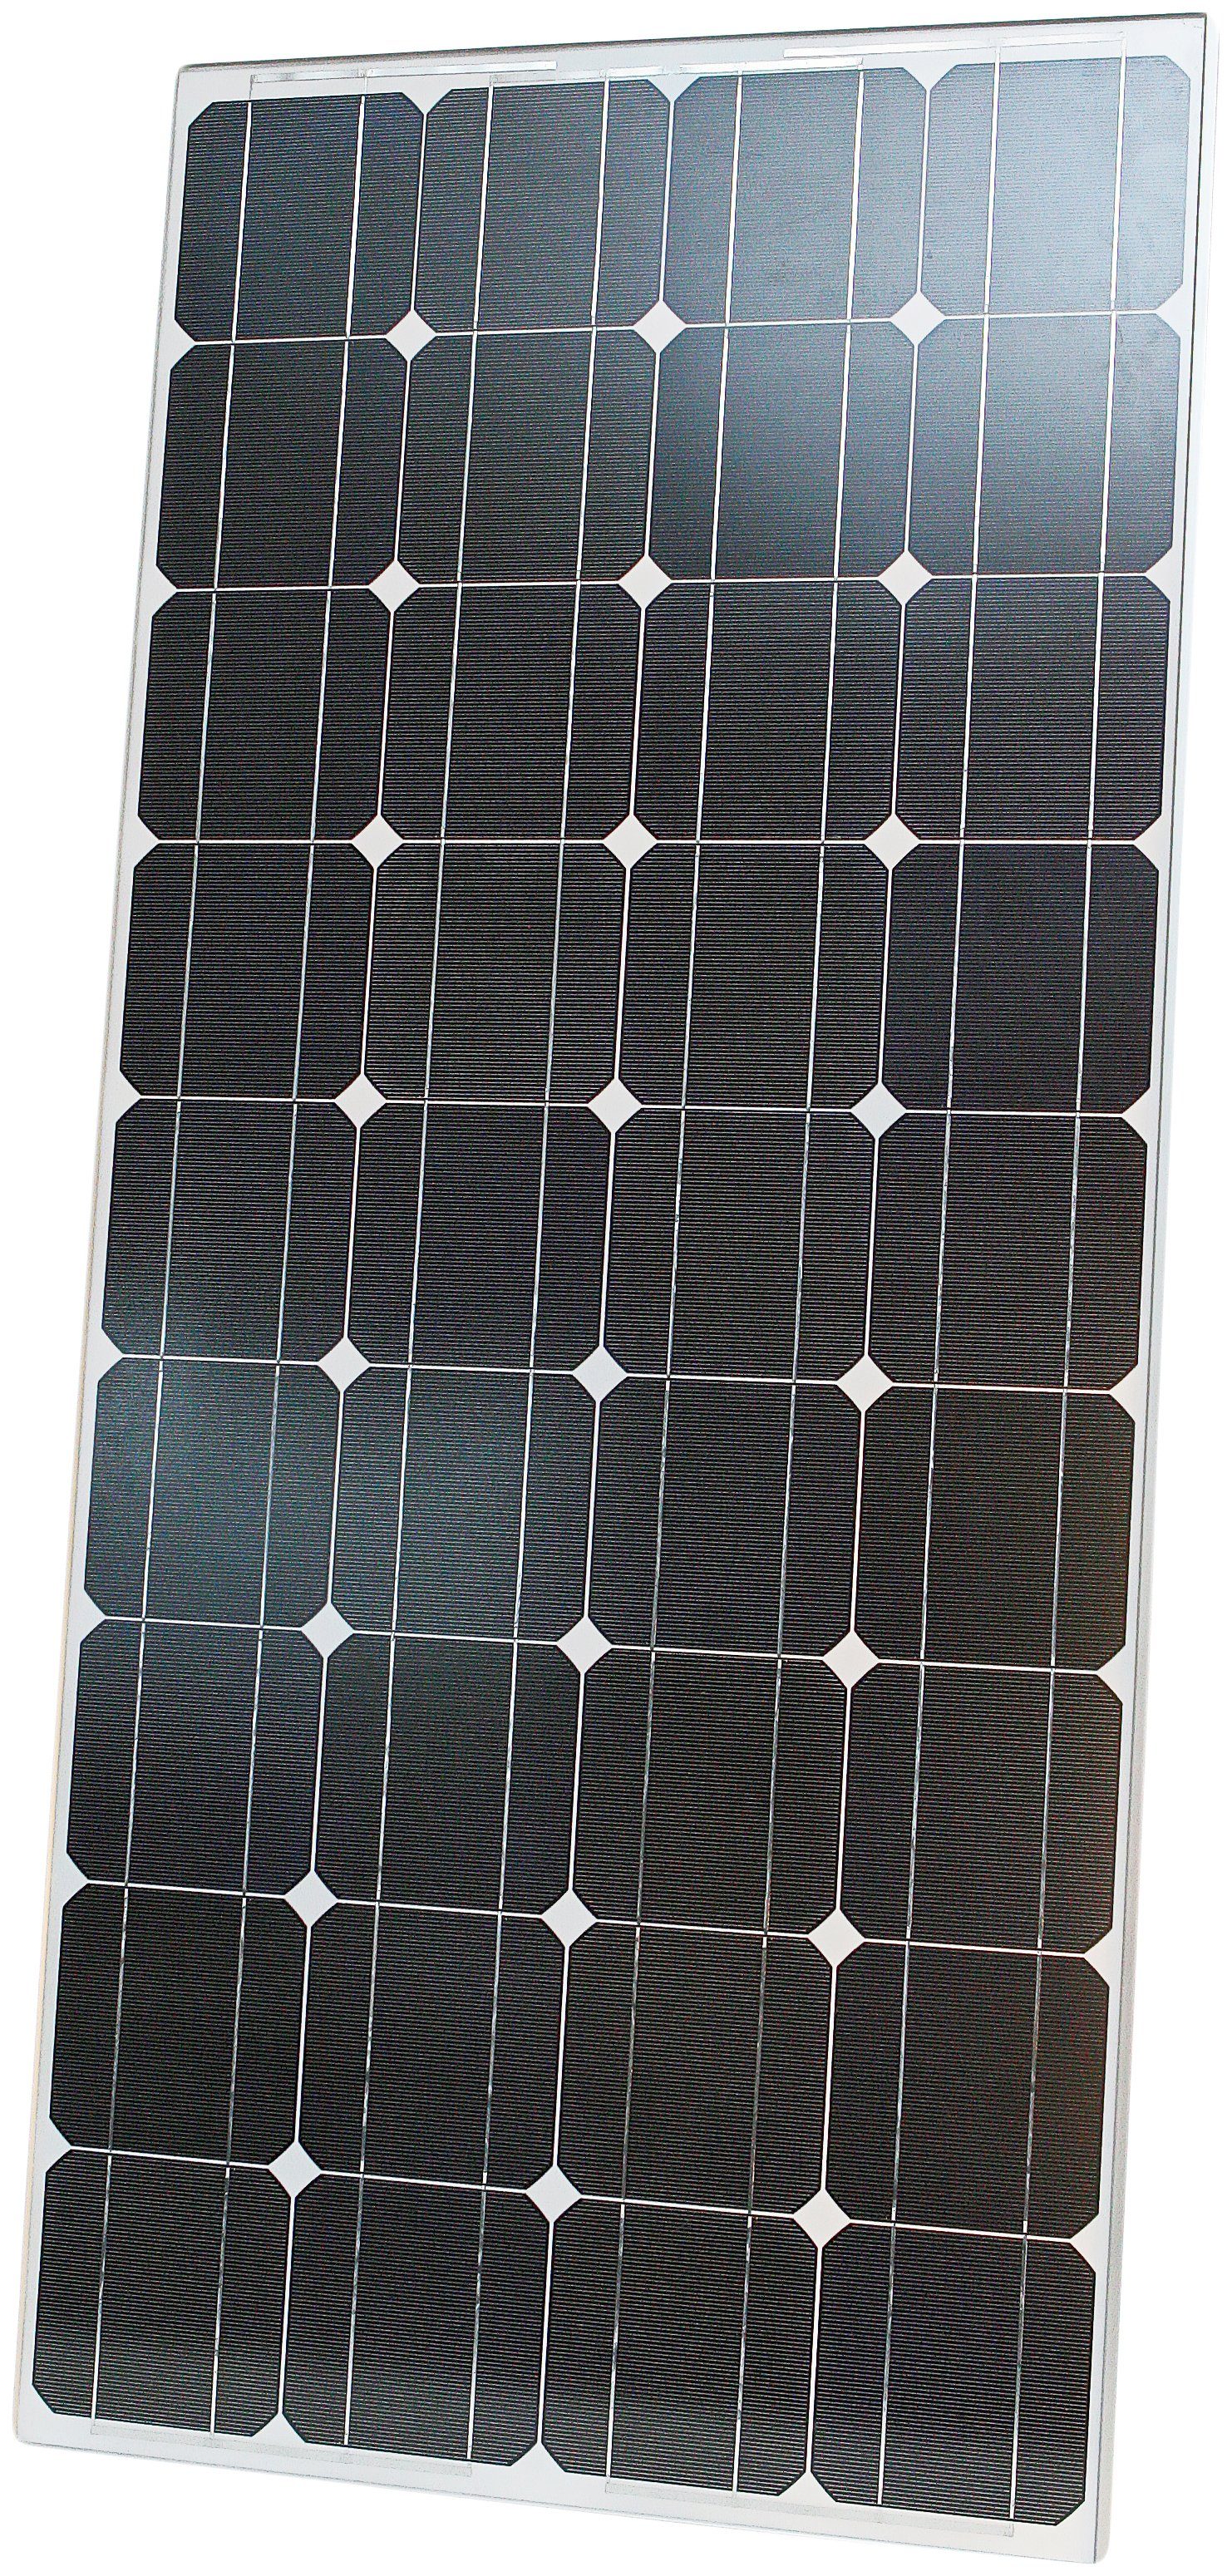 Sunset Solarmodul AS 140 140 W W, 140-6, V, 12 Watt, 140 Monokristallin